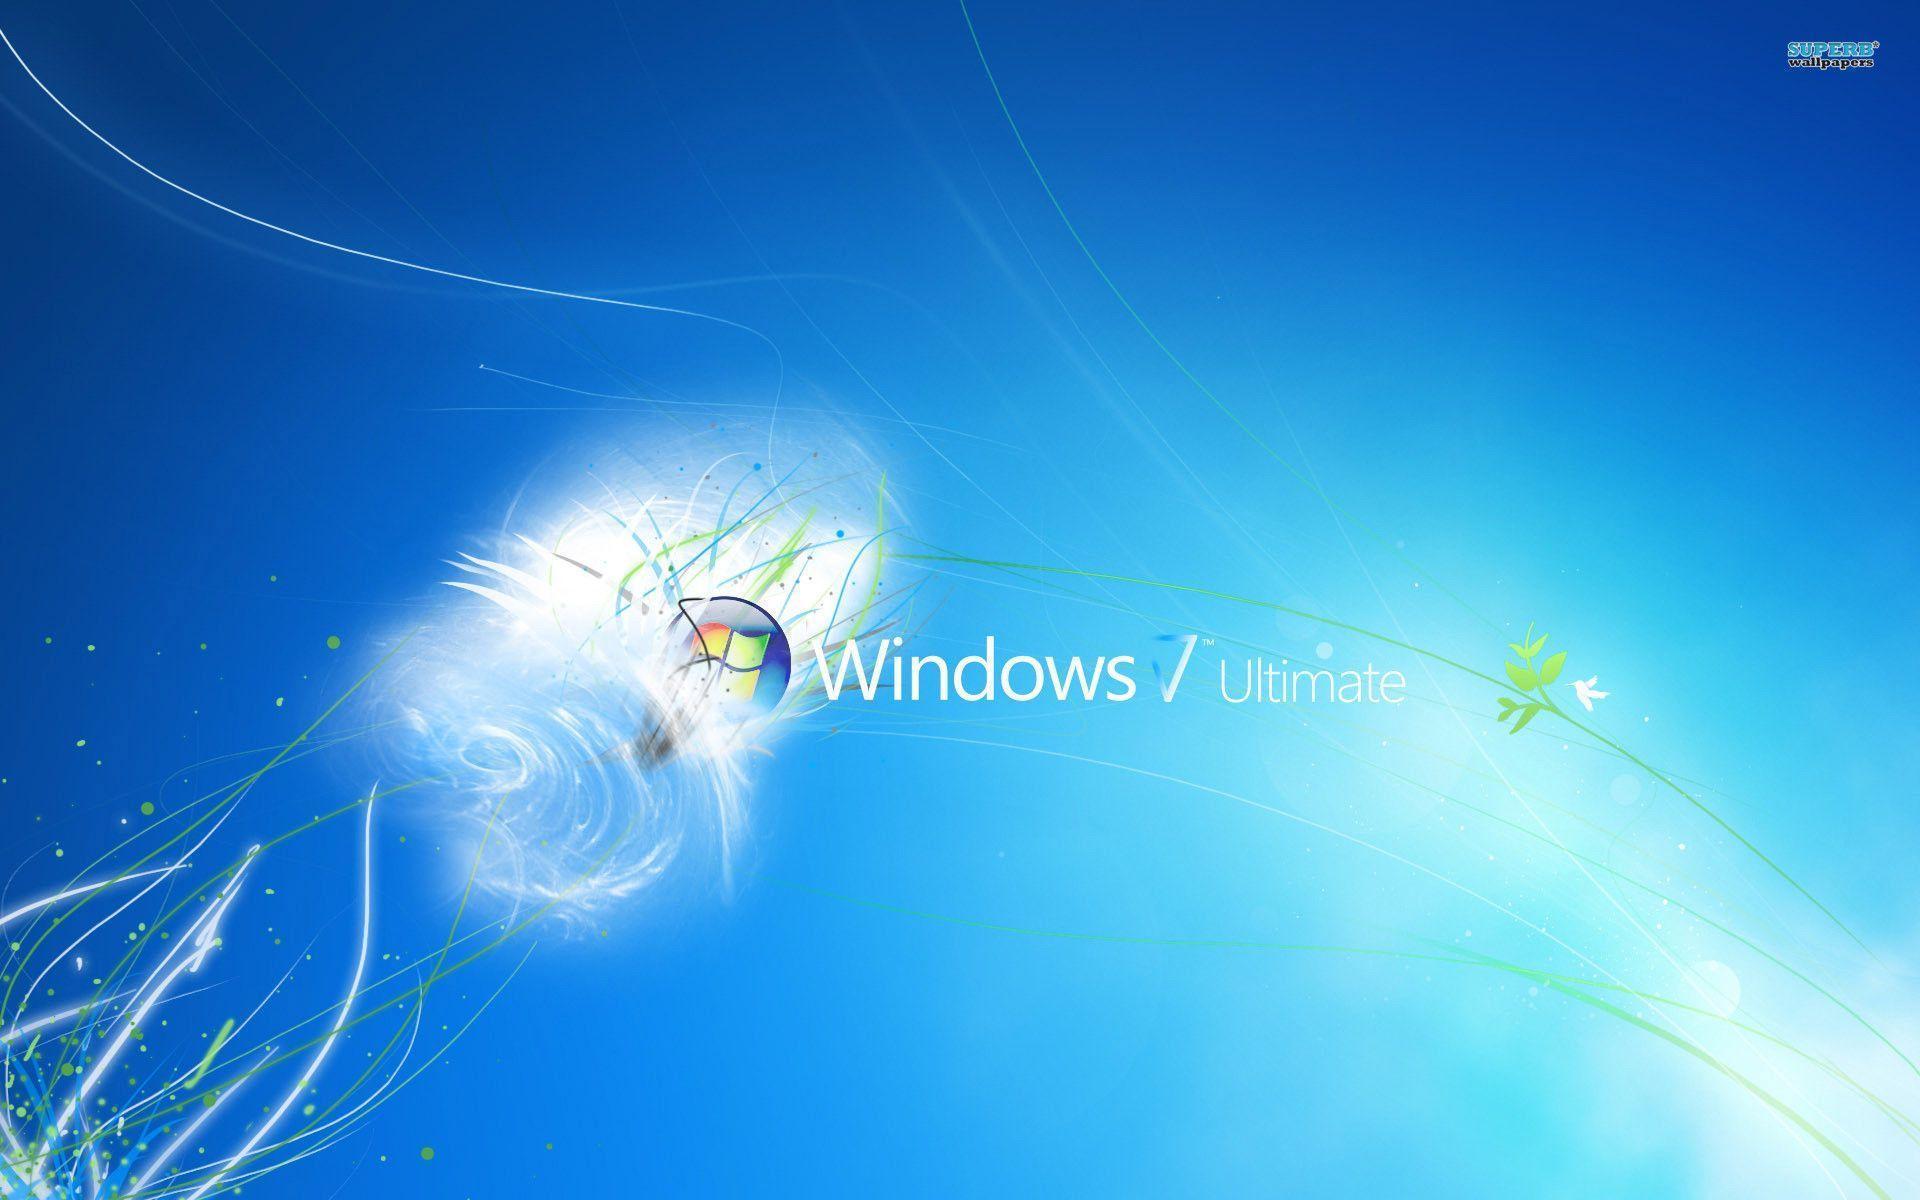 Windows 7 Ultimate wallpaper wallpaper - #